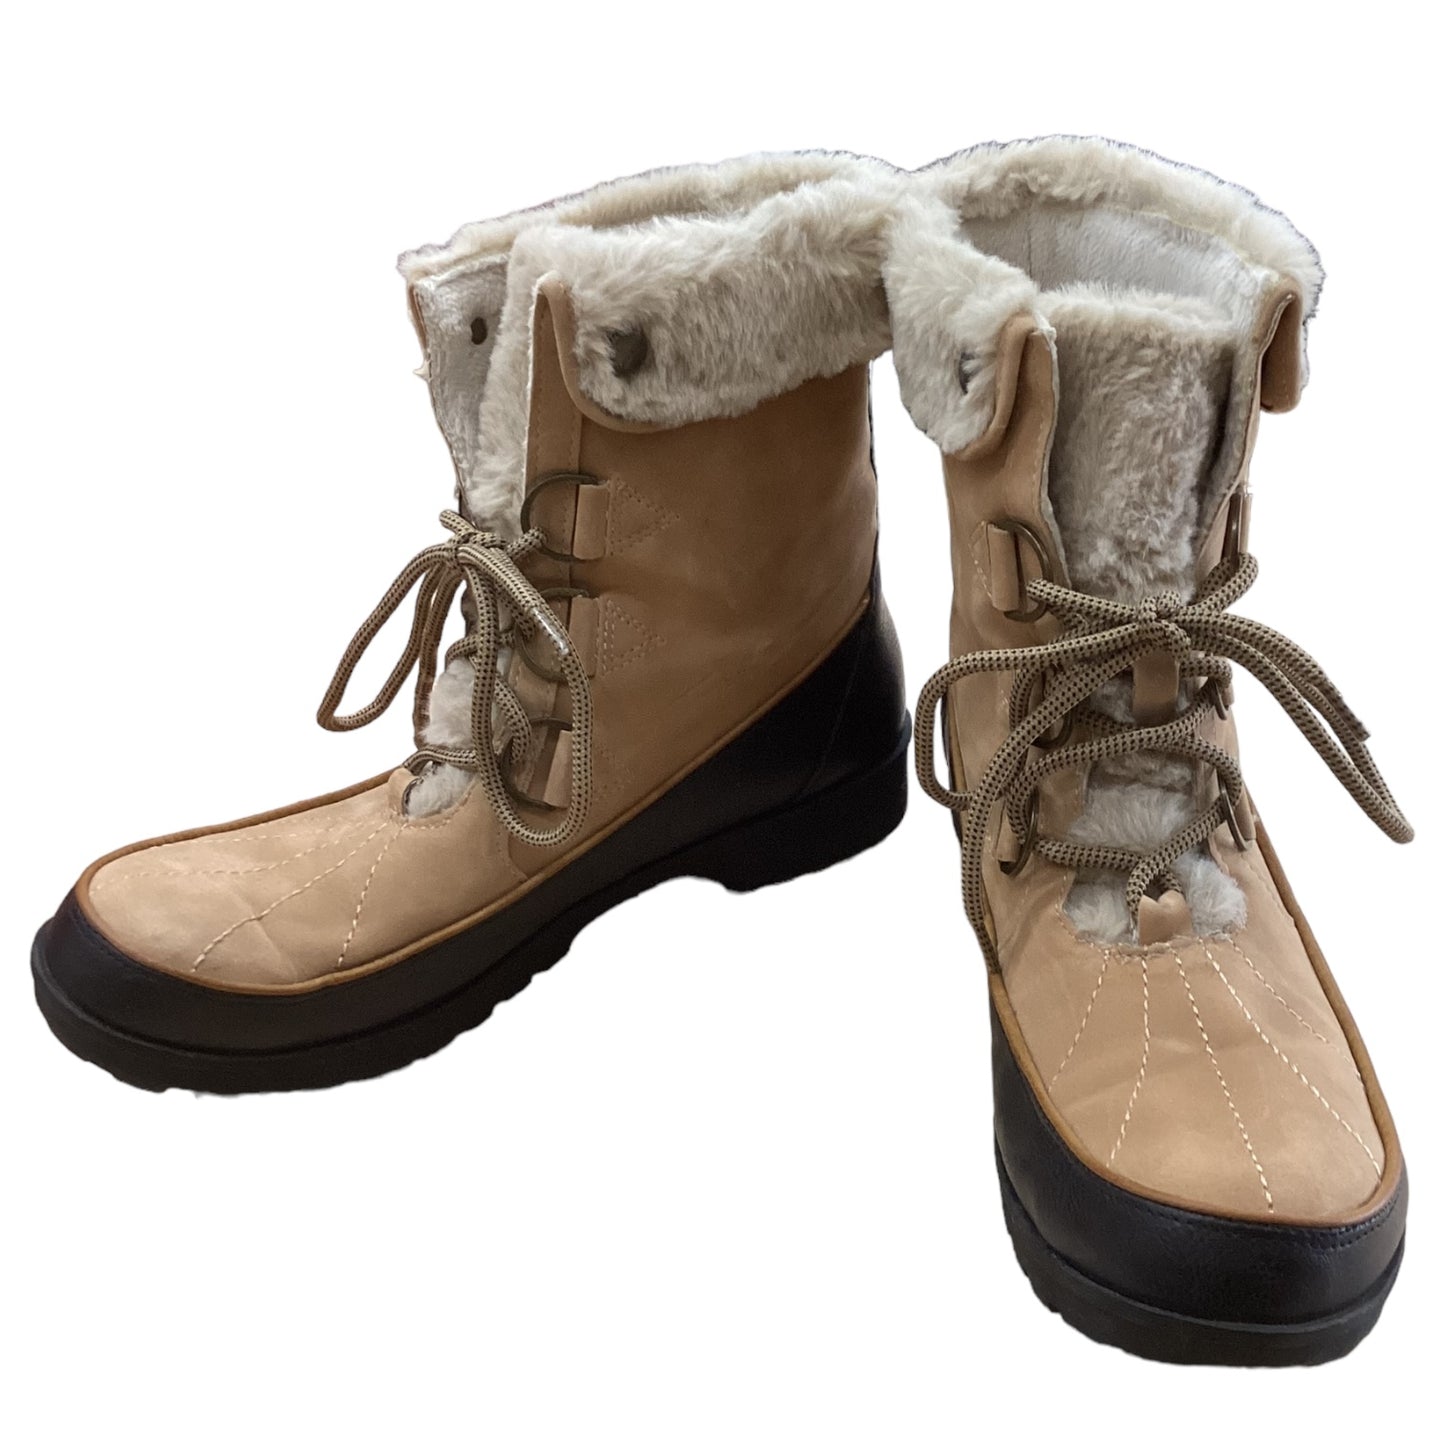 Boots Snow By Jambu  Size: 9.5